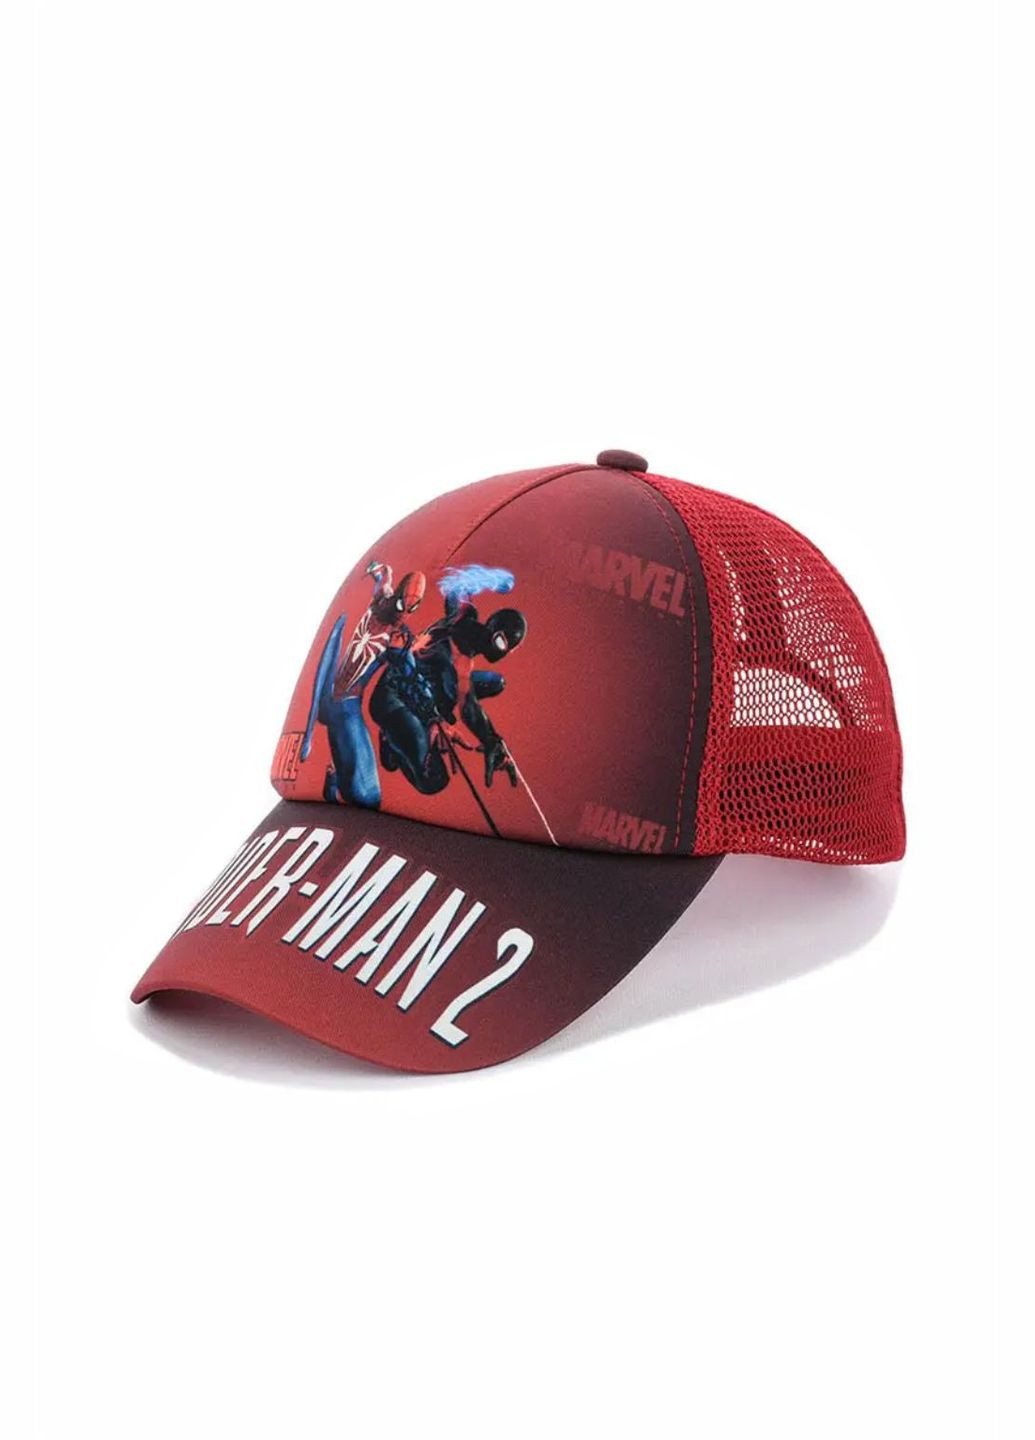 Кепка дитяча із сіткою Людина Павук / Spider Man 2 No Brand дитяча кепка (279381286)